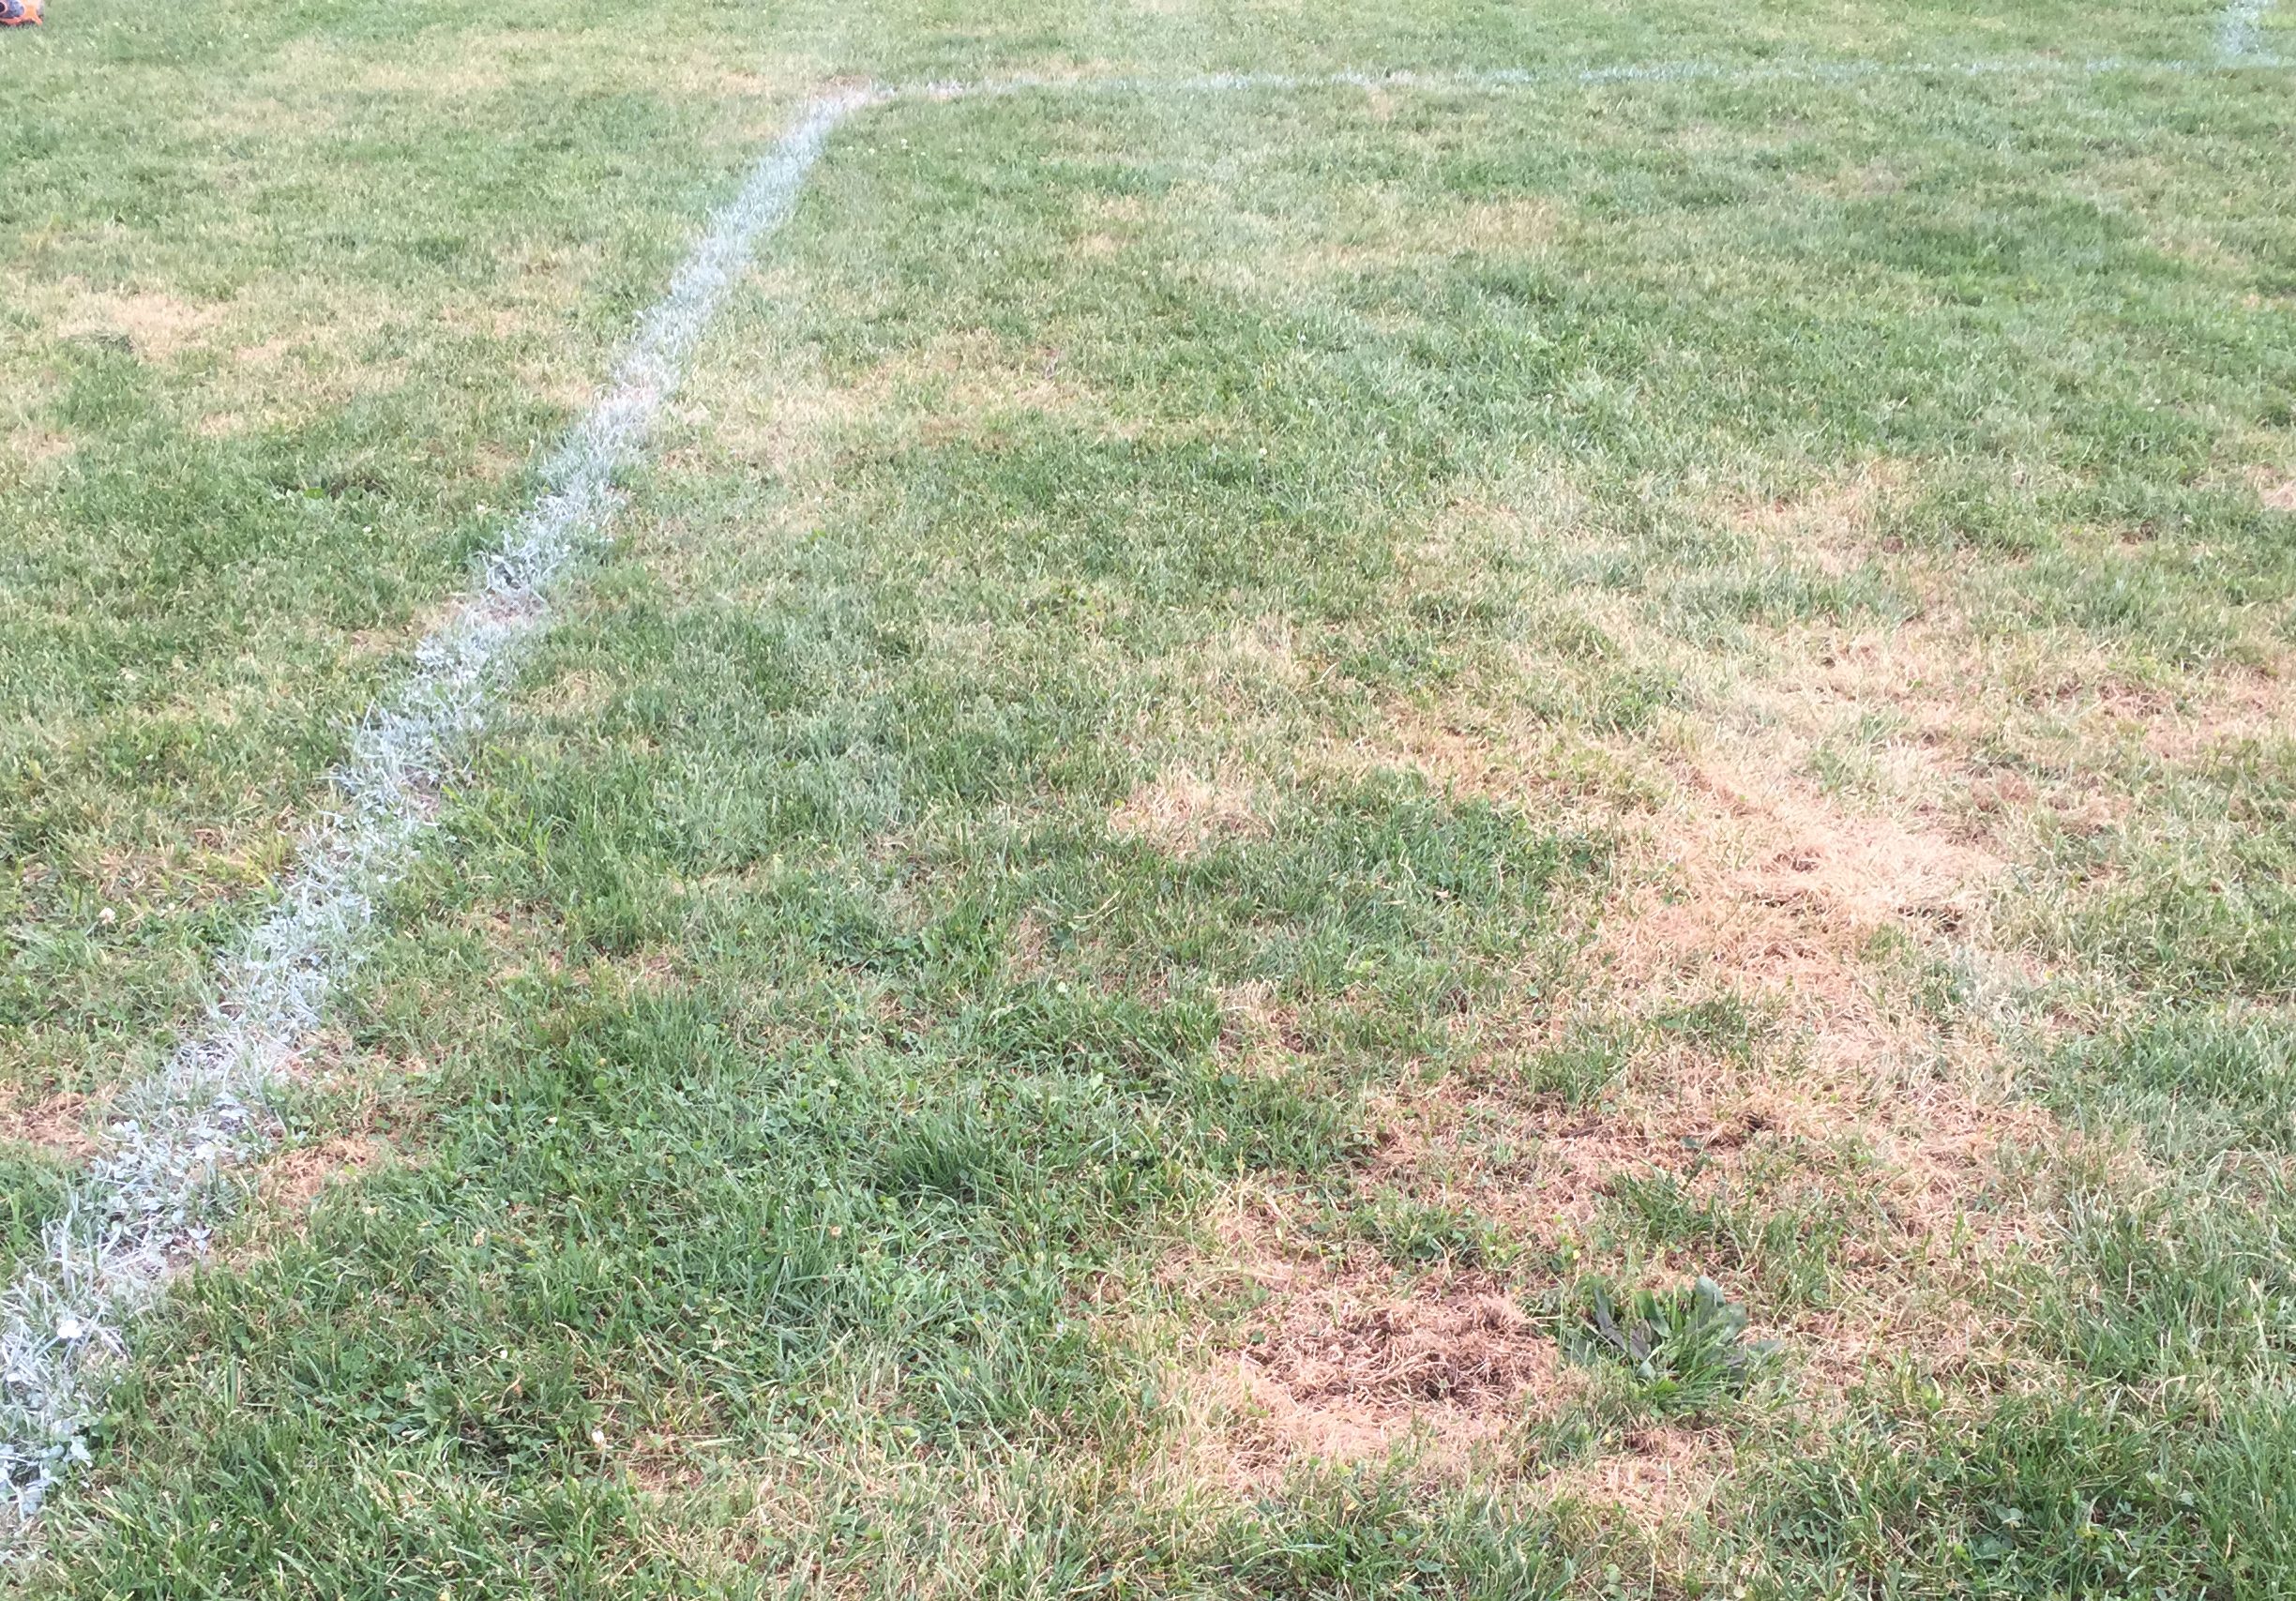 Grub damage to a grass field